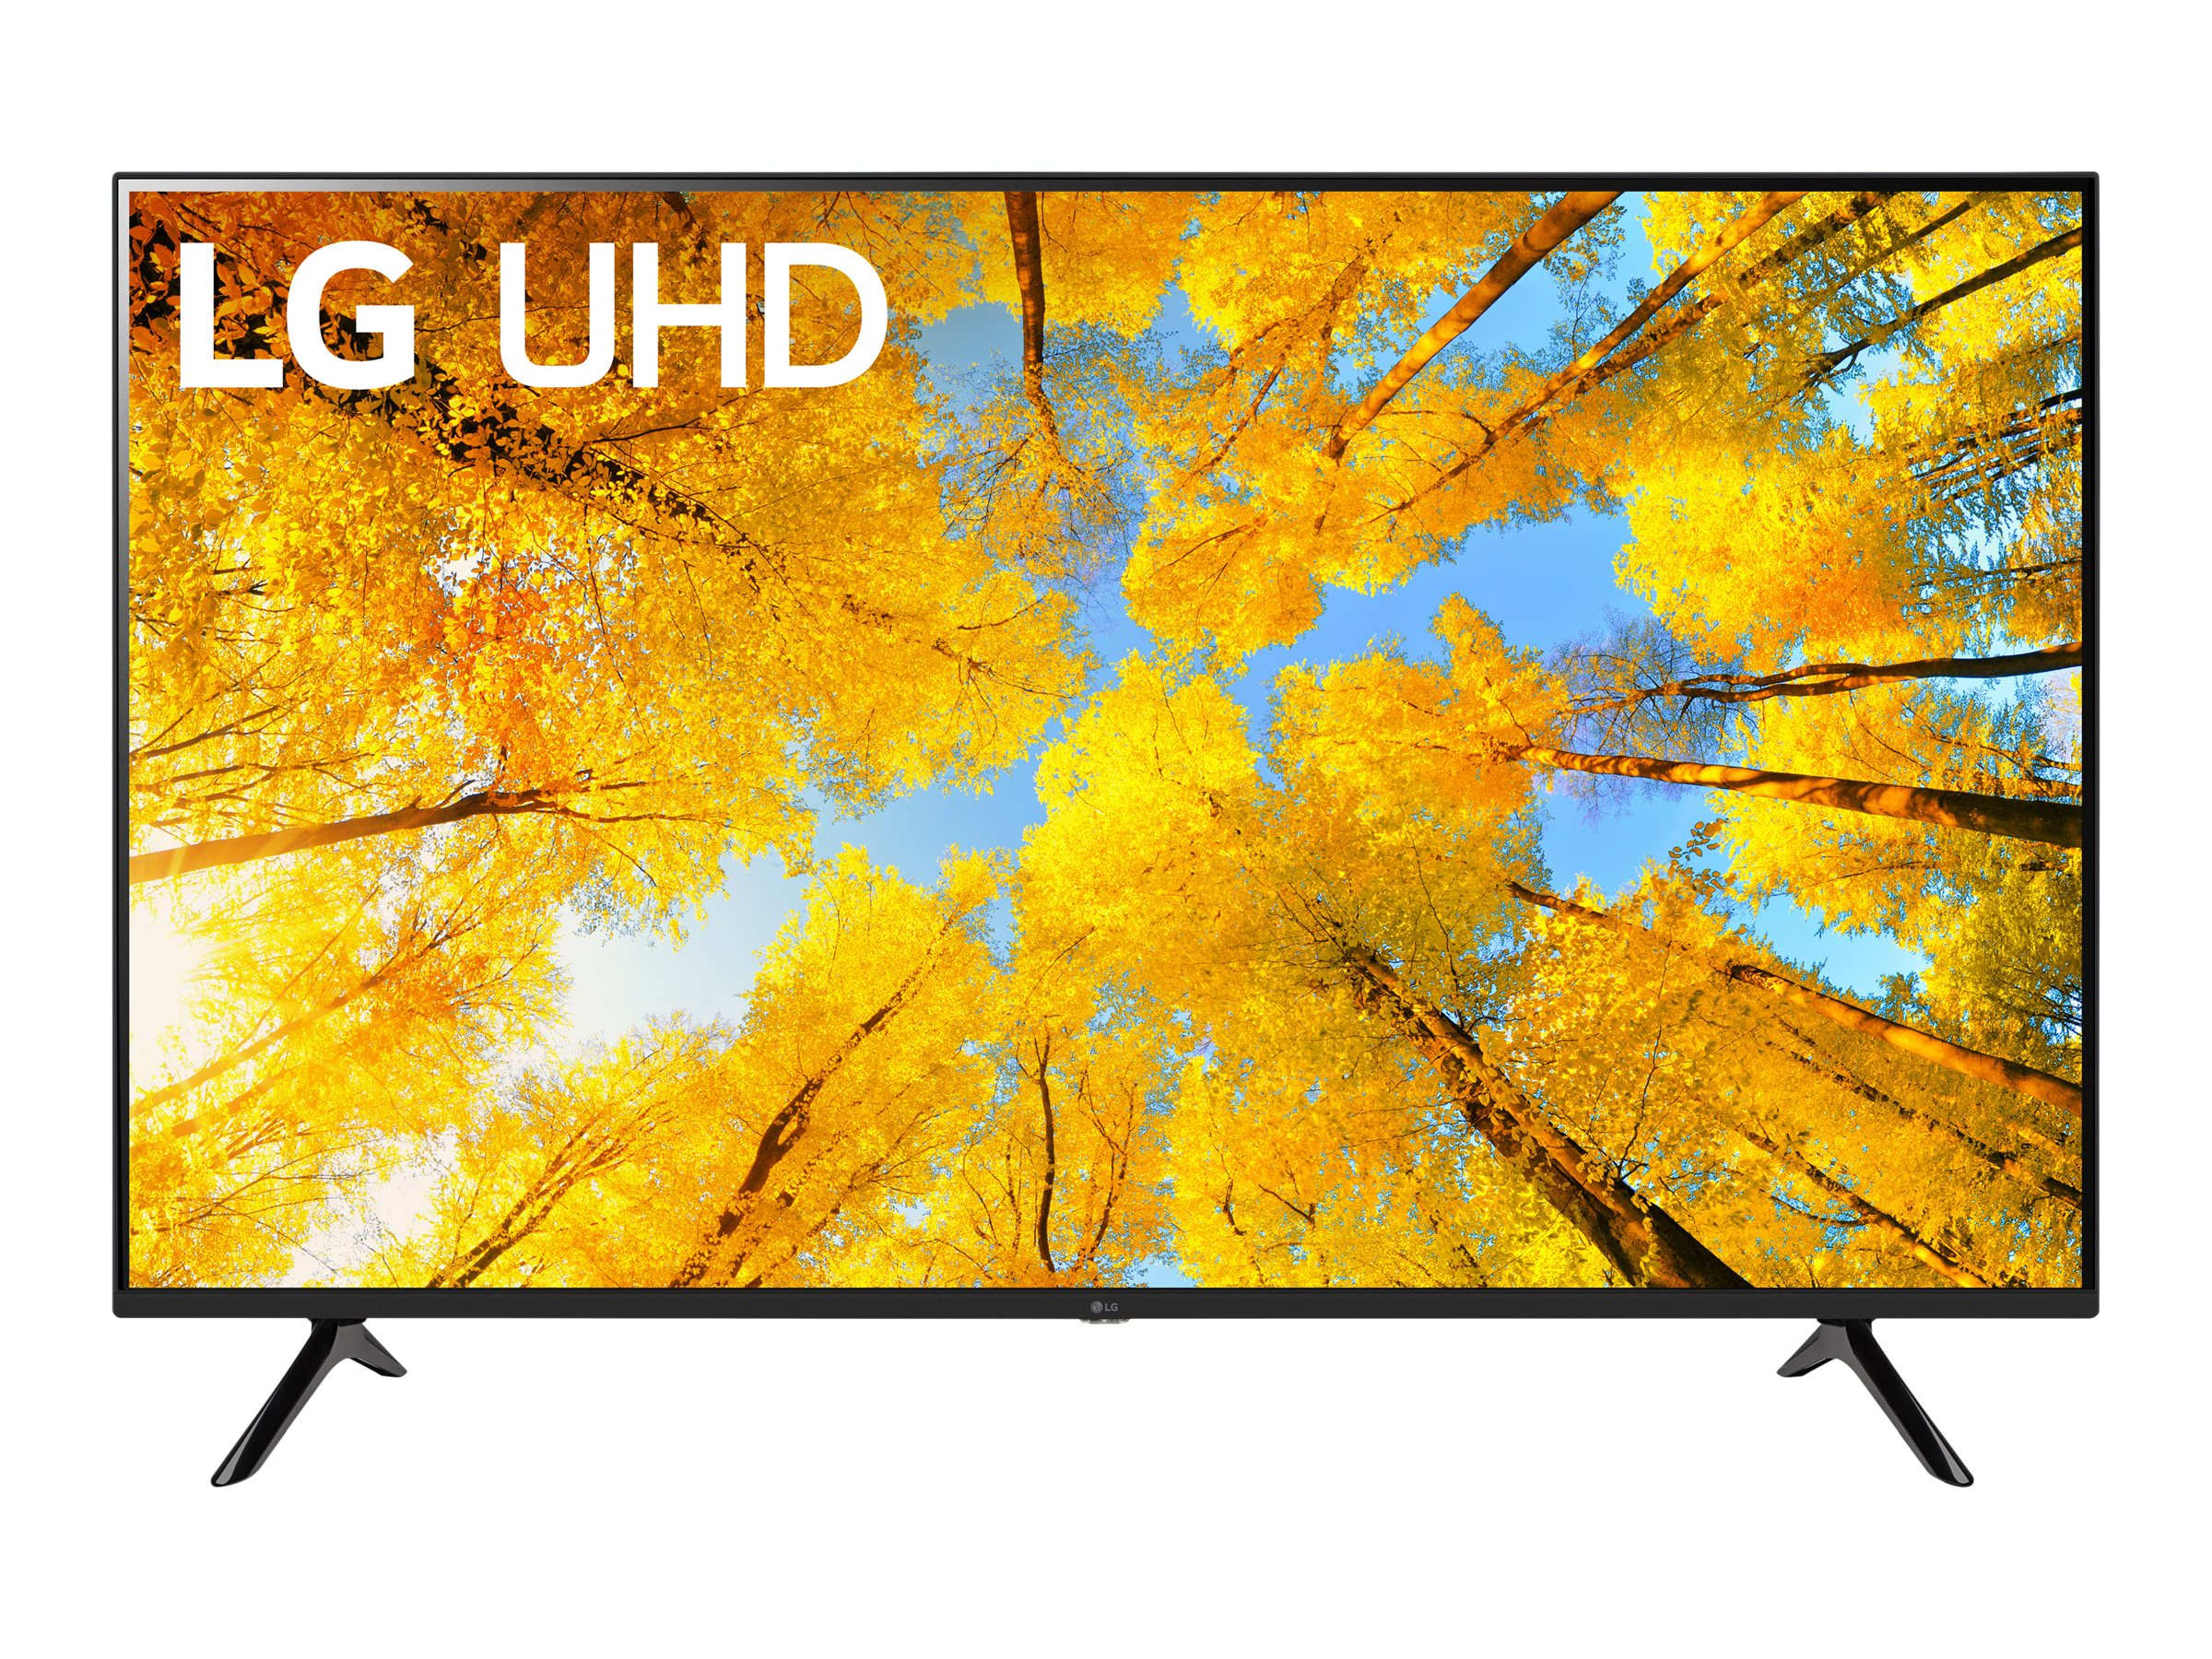 LG Smart LED-LCD TV - UHDTV Black - HDR10, HLG - Direct LED